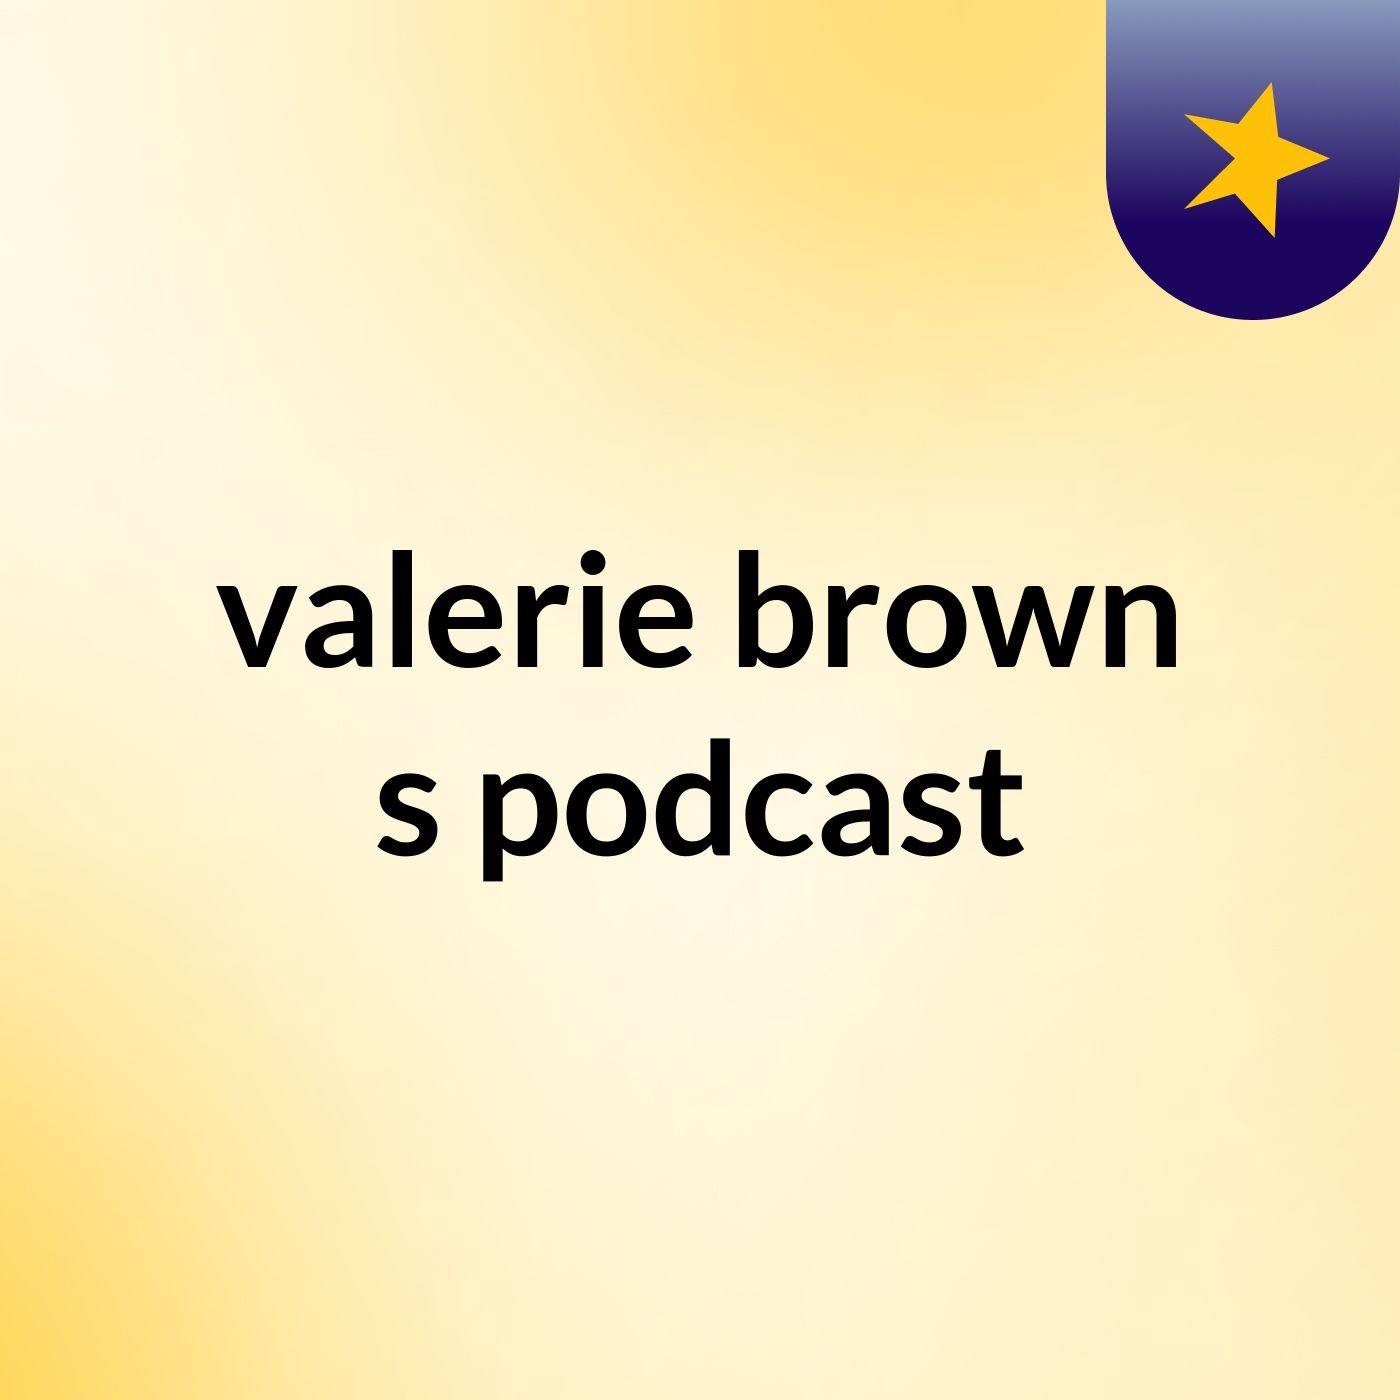 valerie brown's podcast